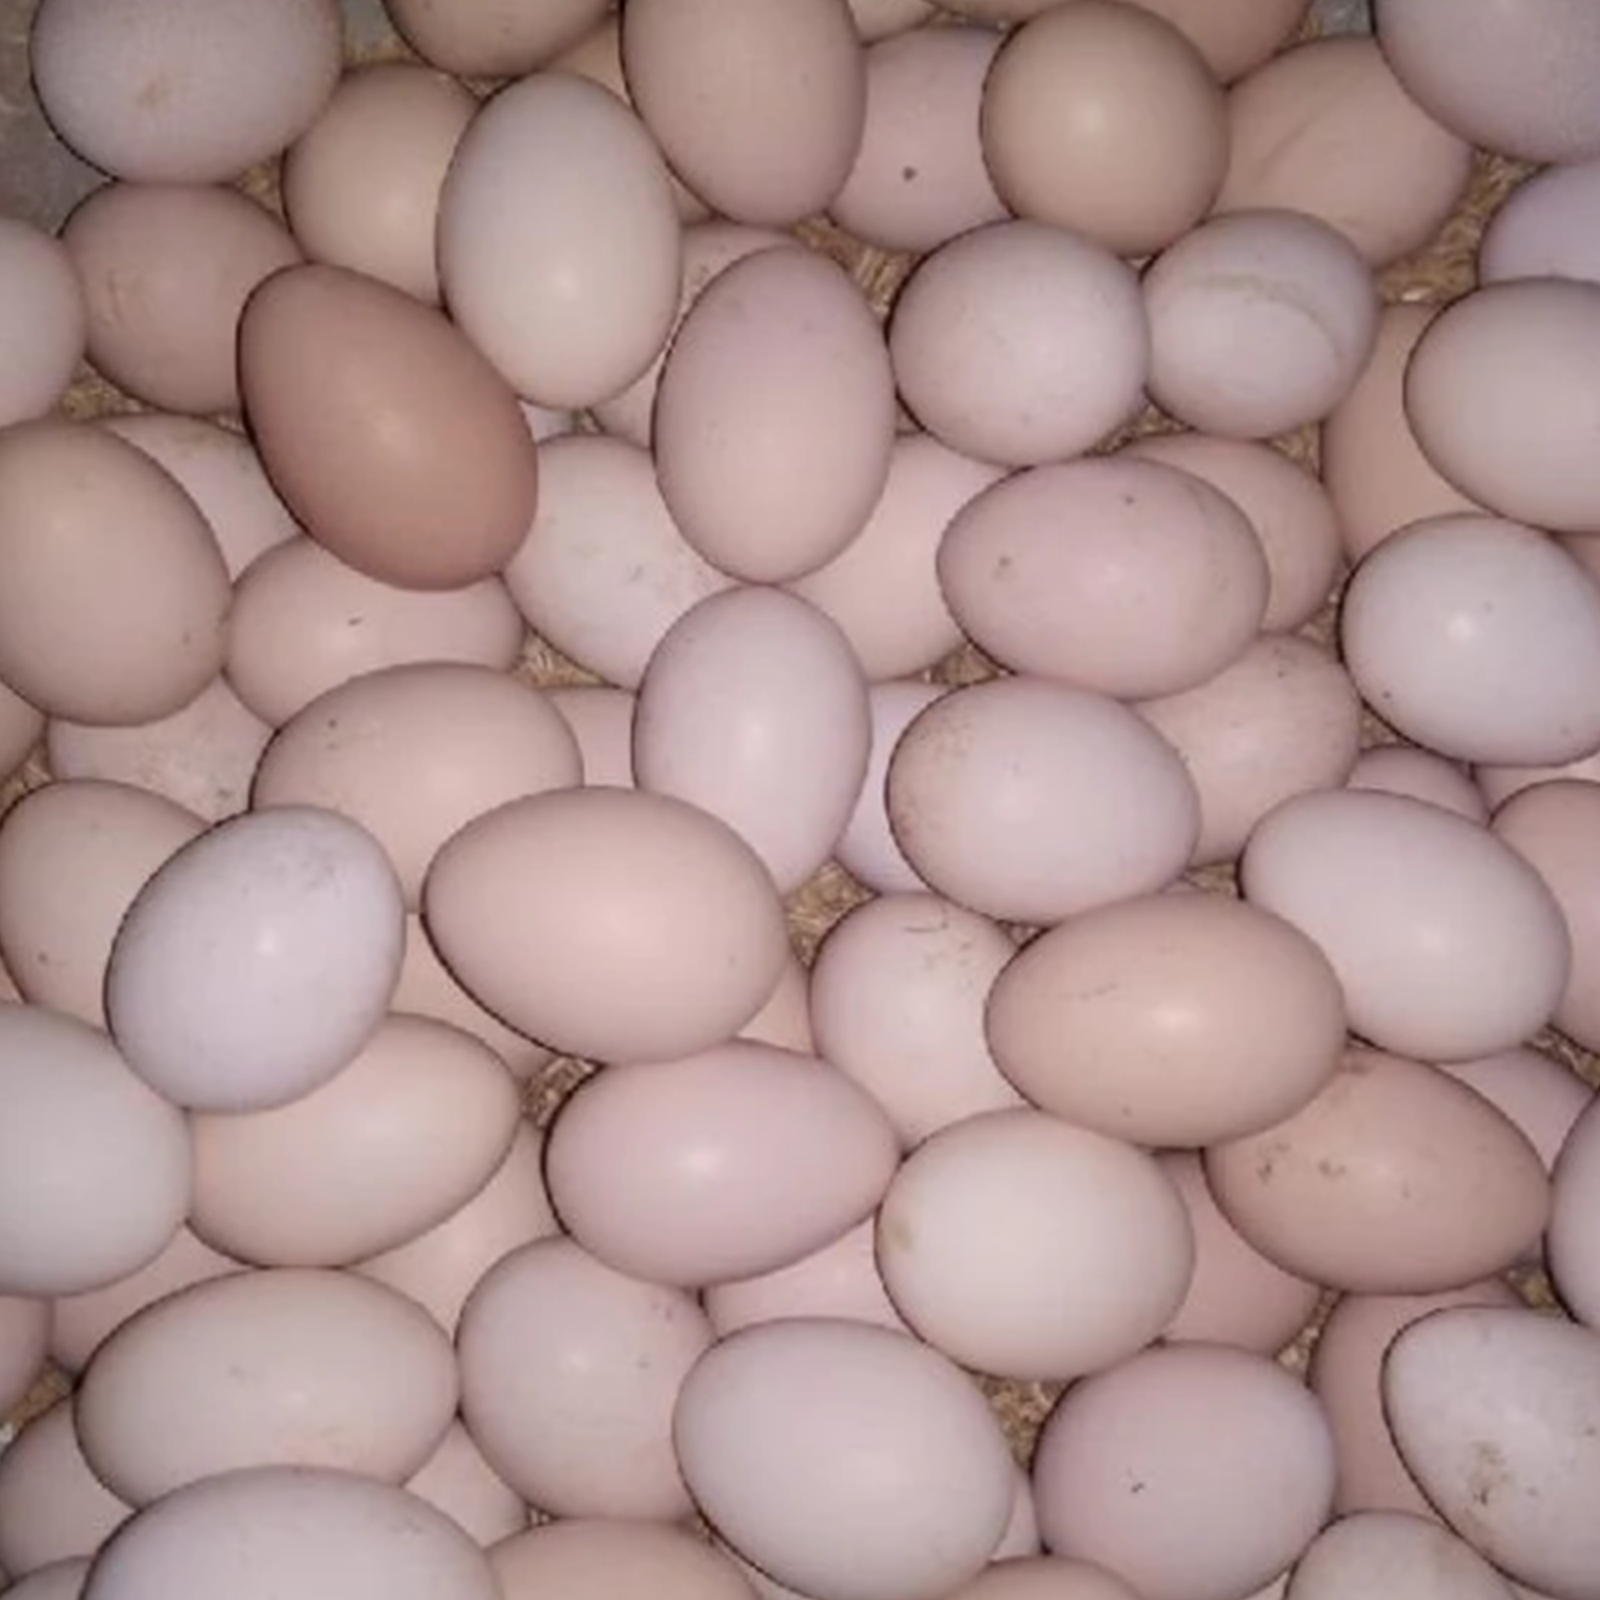 Healthy Daily kadaknath Eggs 6 pcs pack